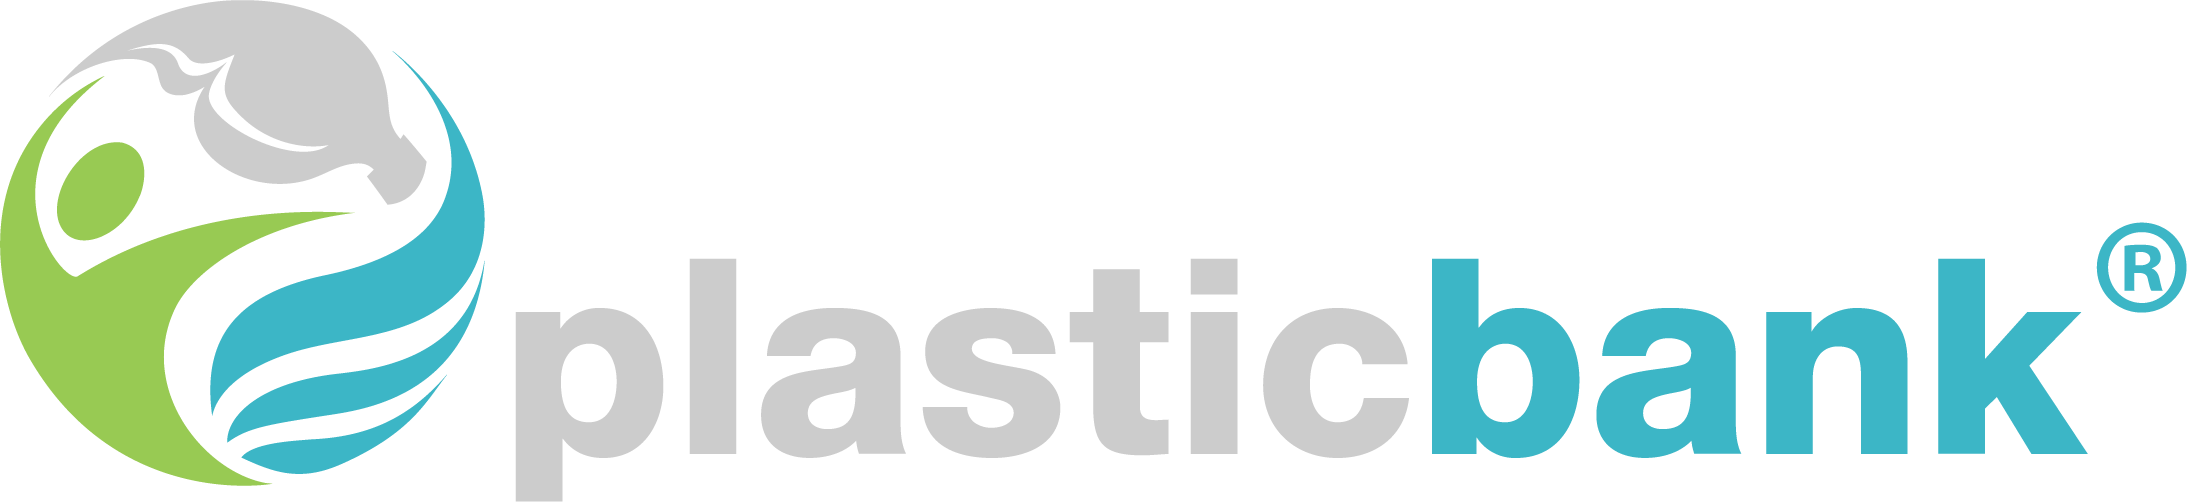 PlasticBank-Logo-Horizontal-01-Colour 4xScale (1).png